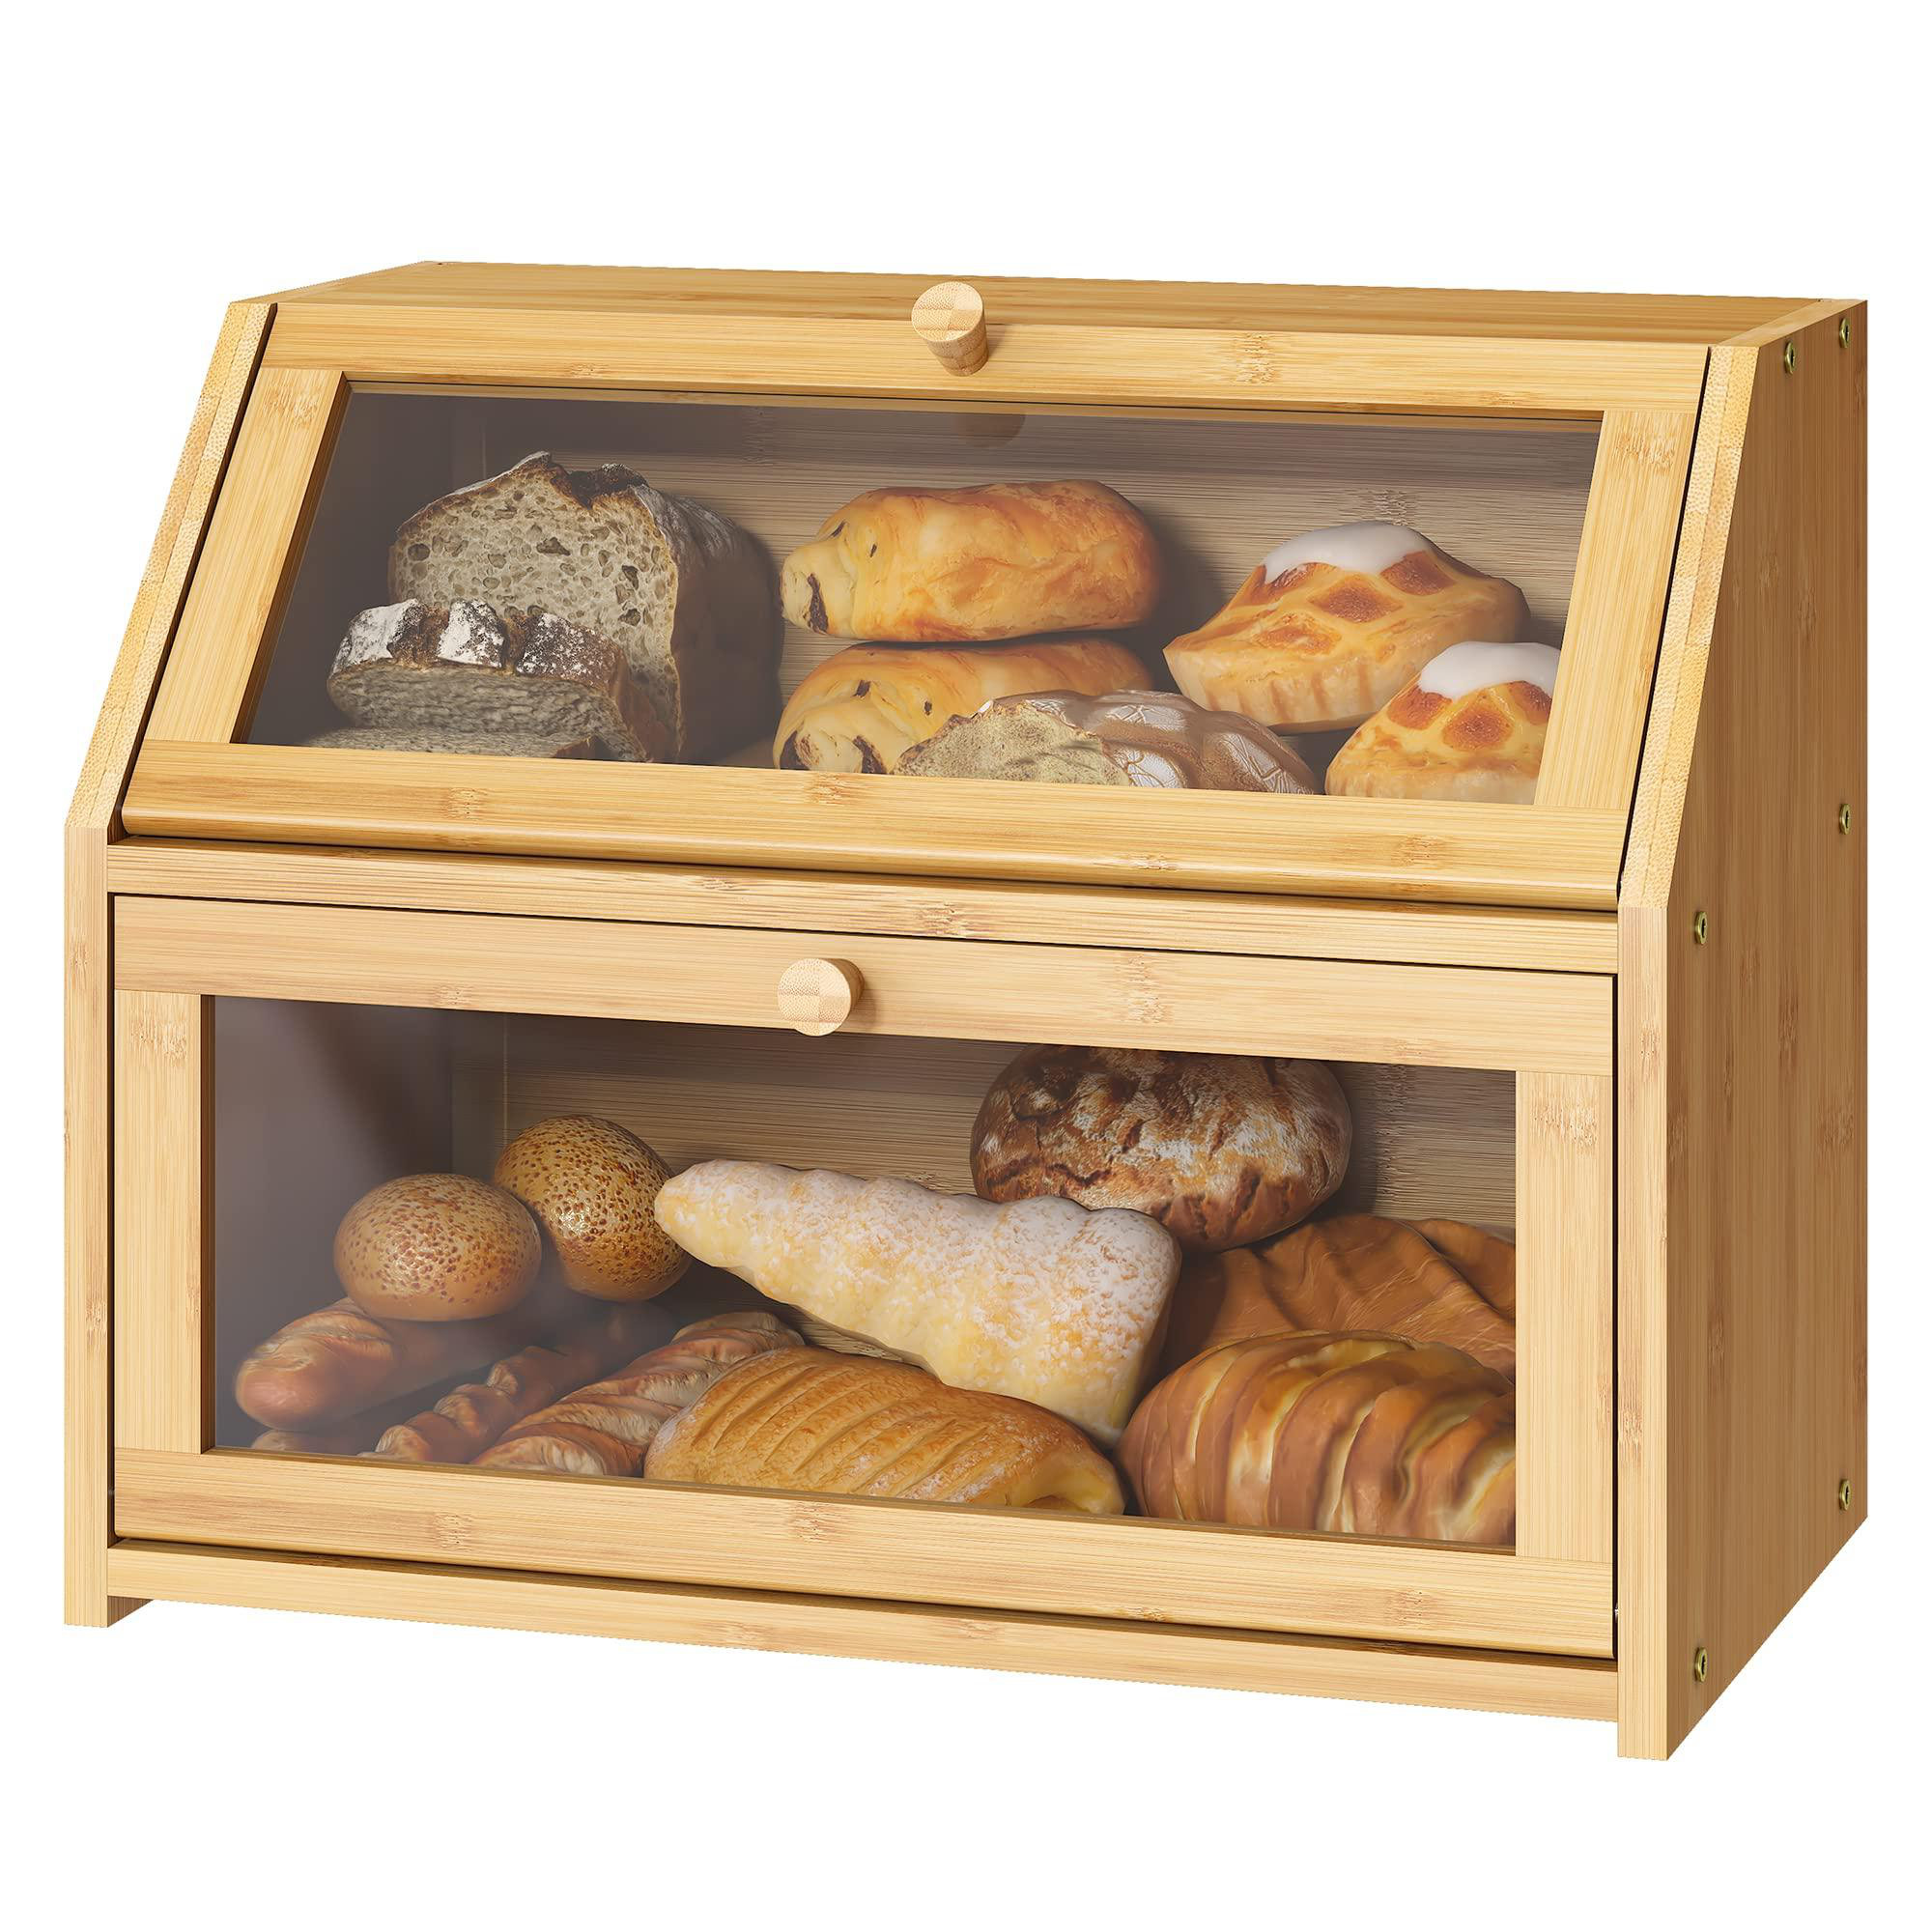 3Pcs Bread Container Airtight Bread Box Loaf Container Bread